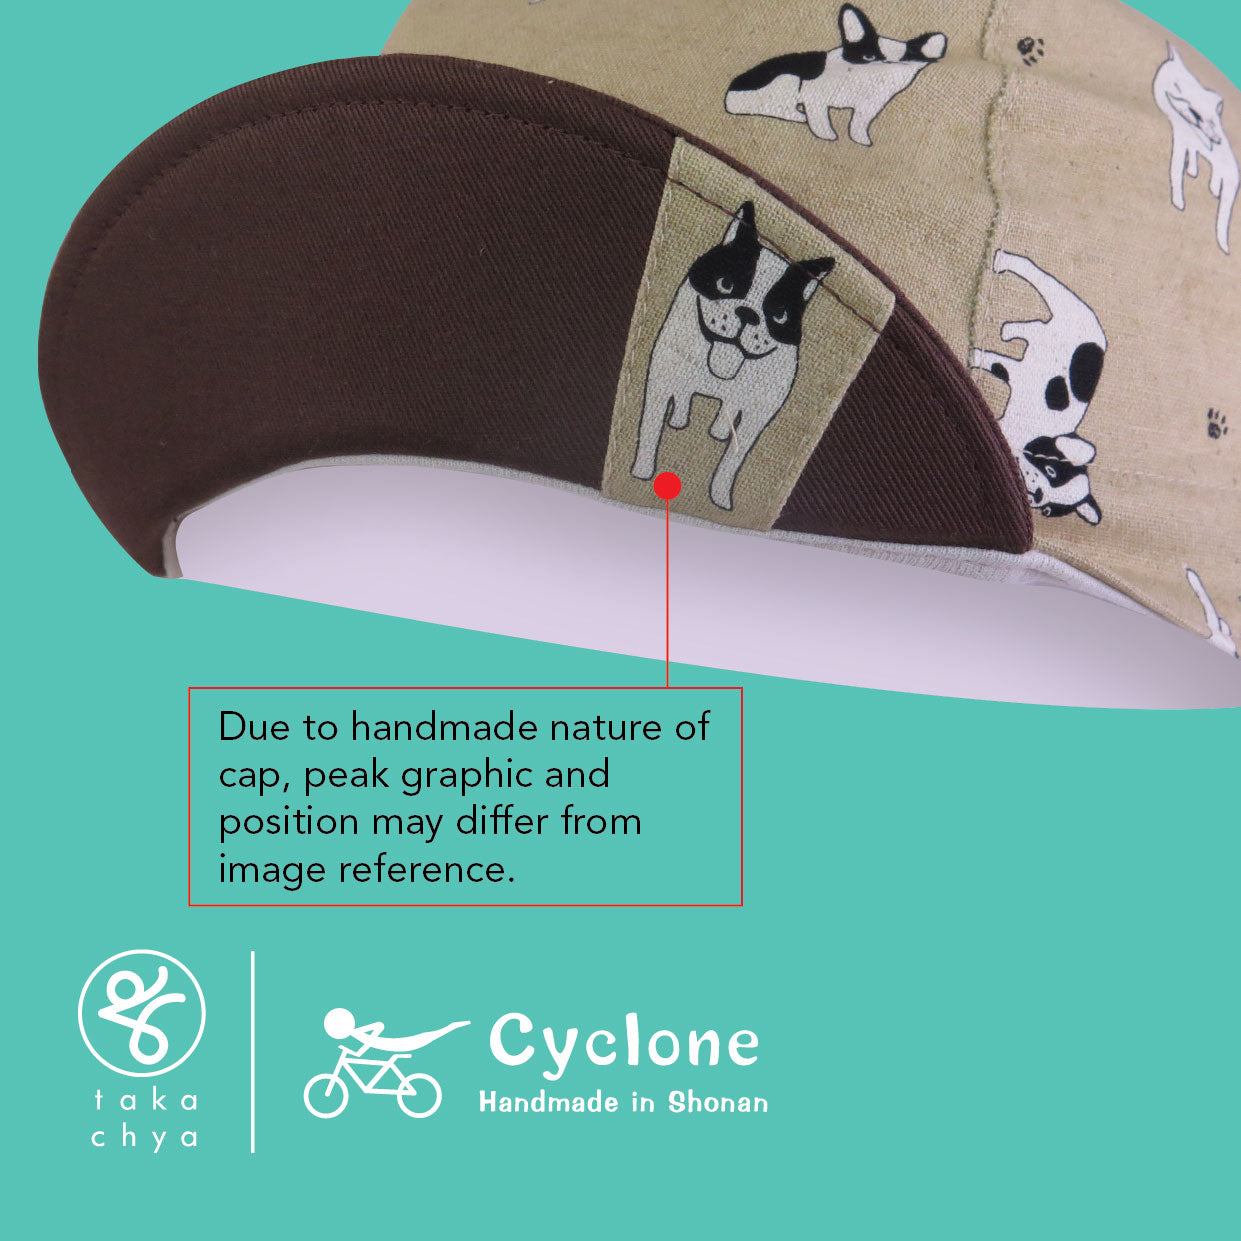 Cafe Au Lait Dog - Cyclone Chee Japanese Handmade Cycling Cap